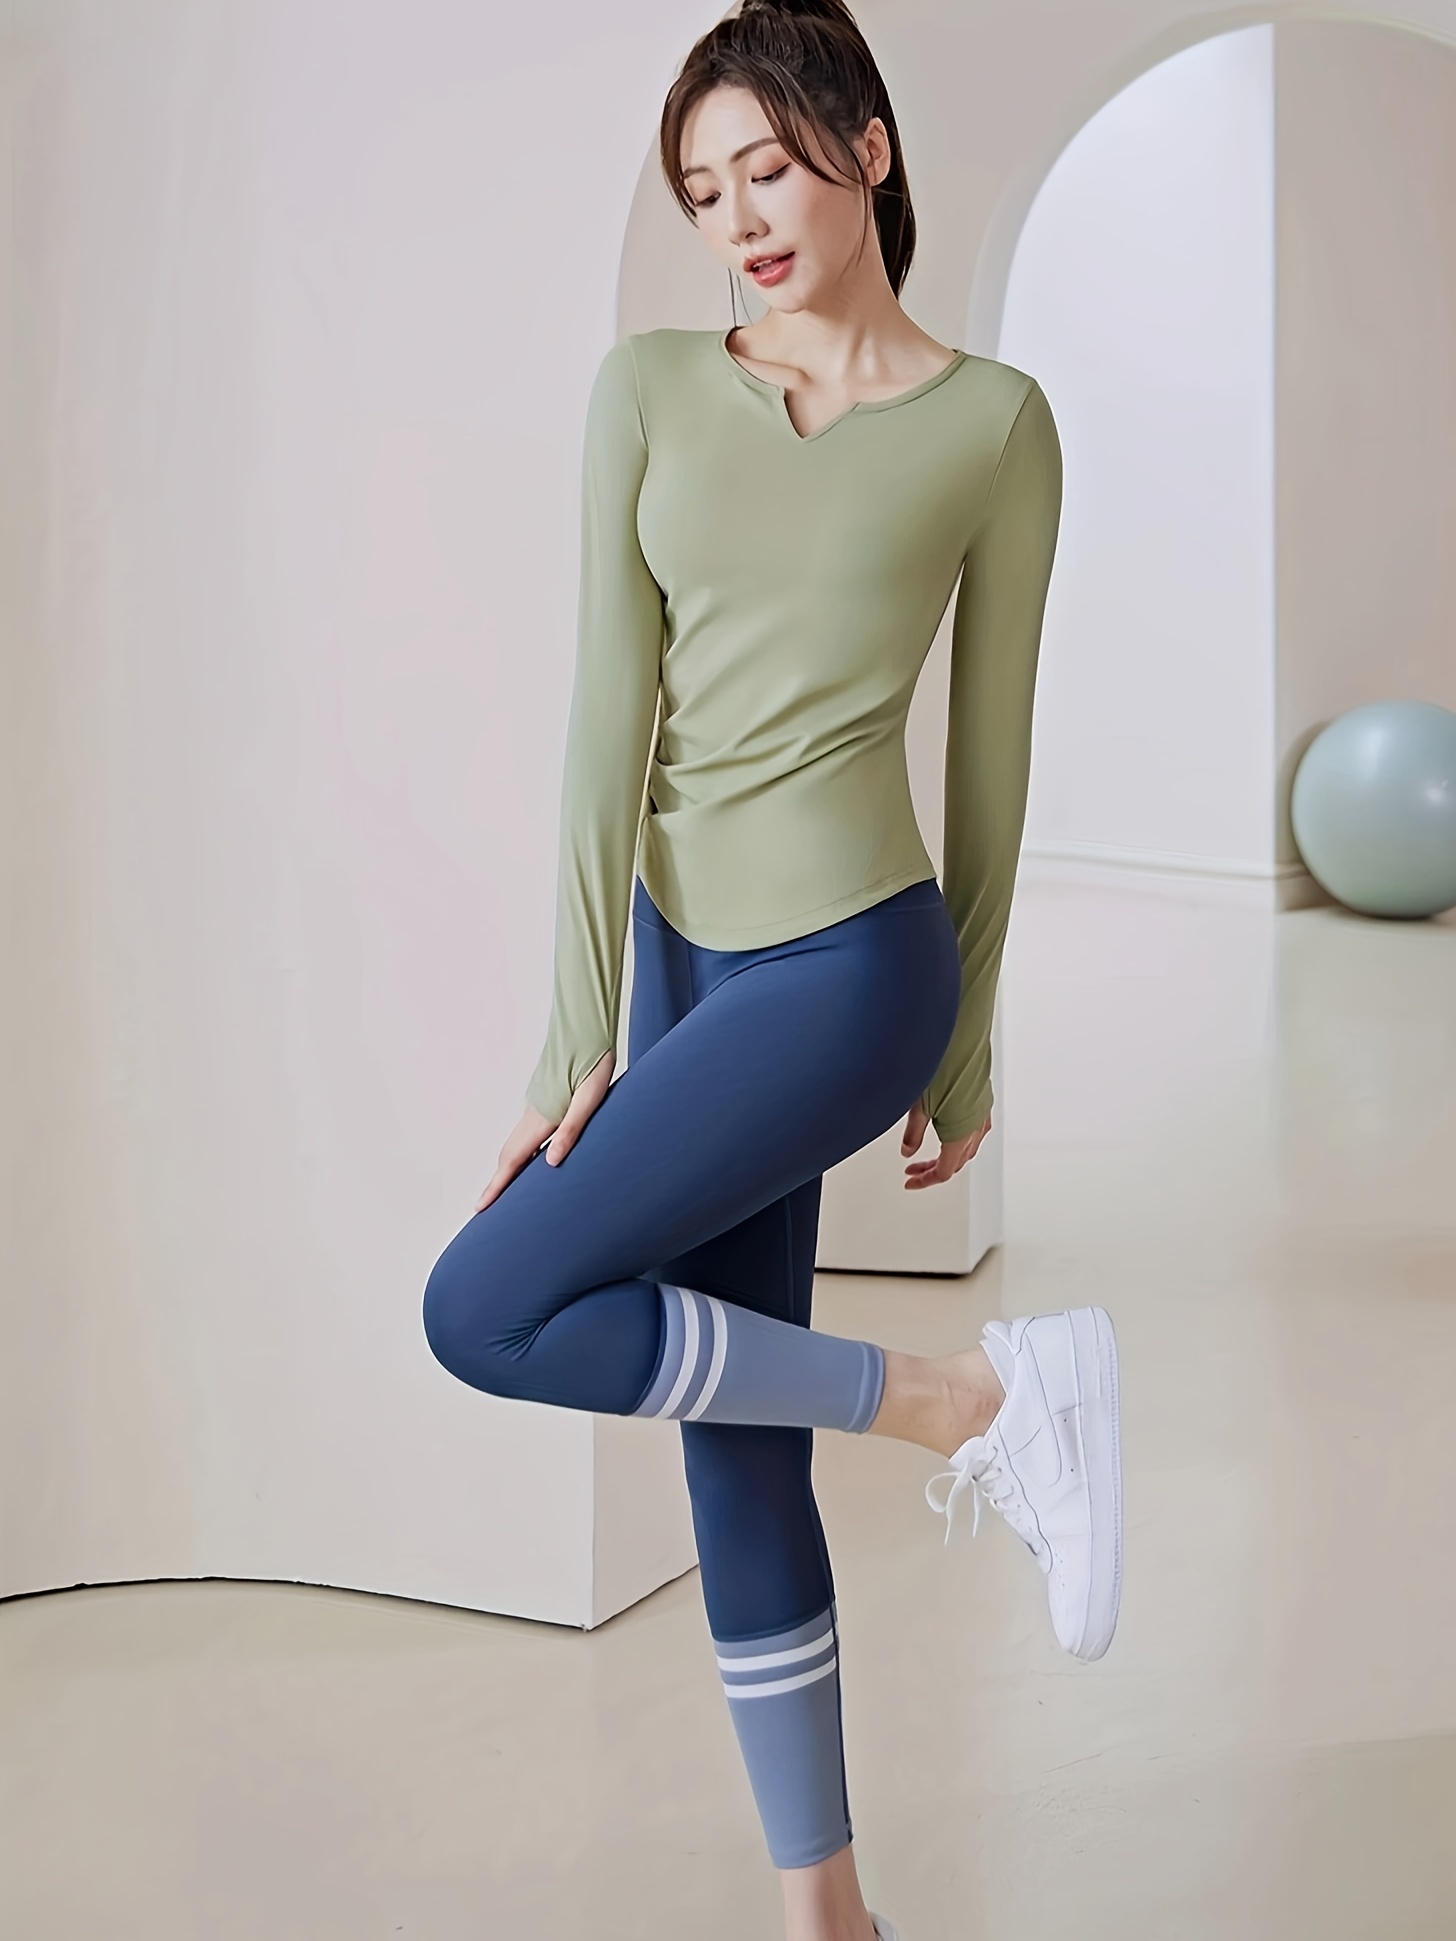 Sexy Long Sleeve Yoga Shirts Built In Bra Women Slim Fit Workout Sport T  Shirt Gym